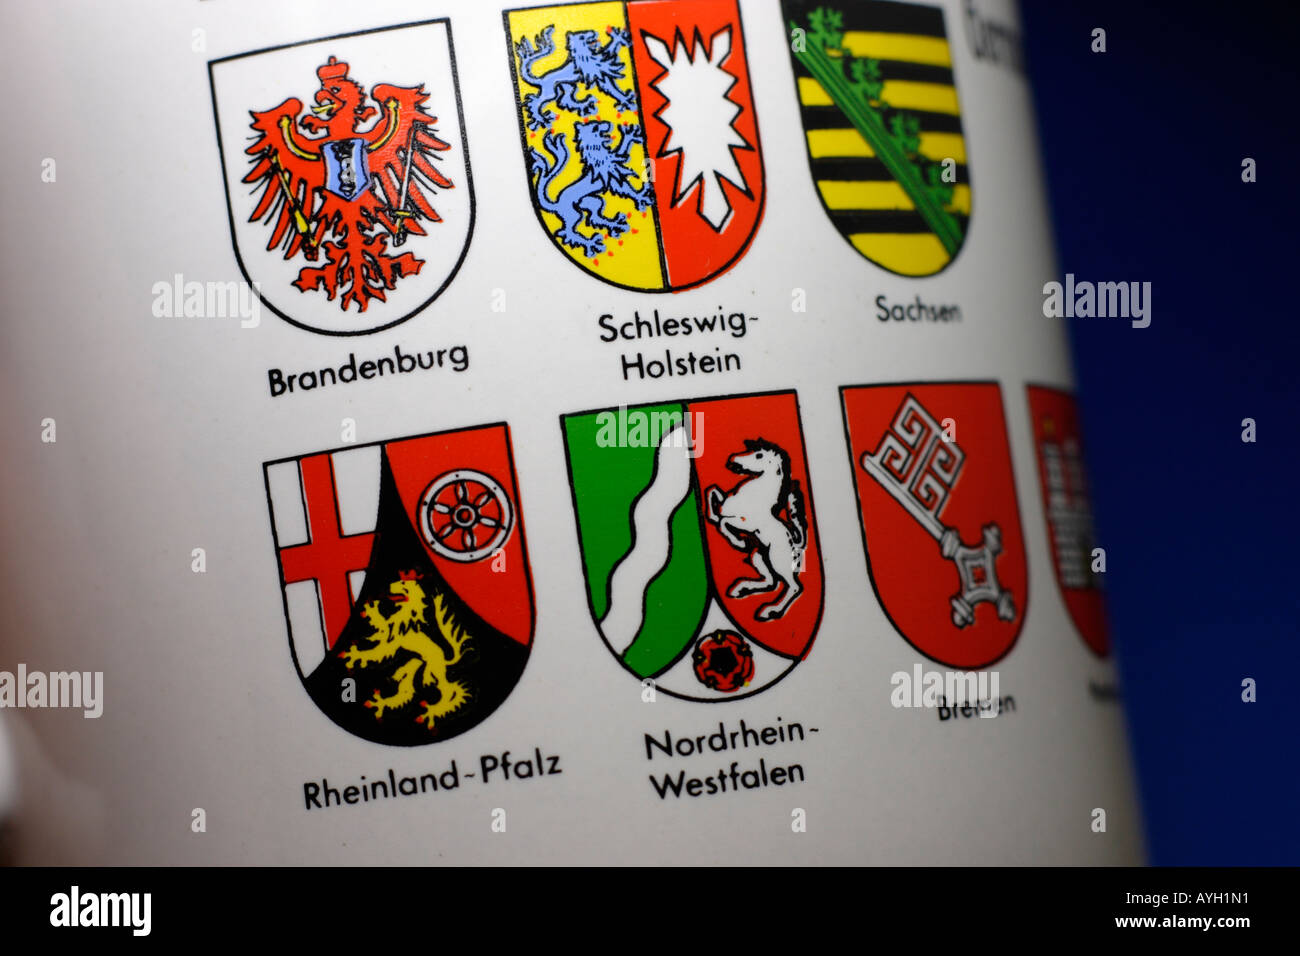 bundesrepublik deutschland germany german republic coat of arms printed on a cup Stock Photo